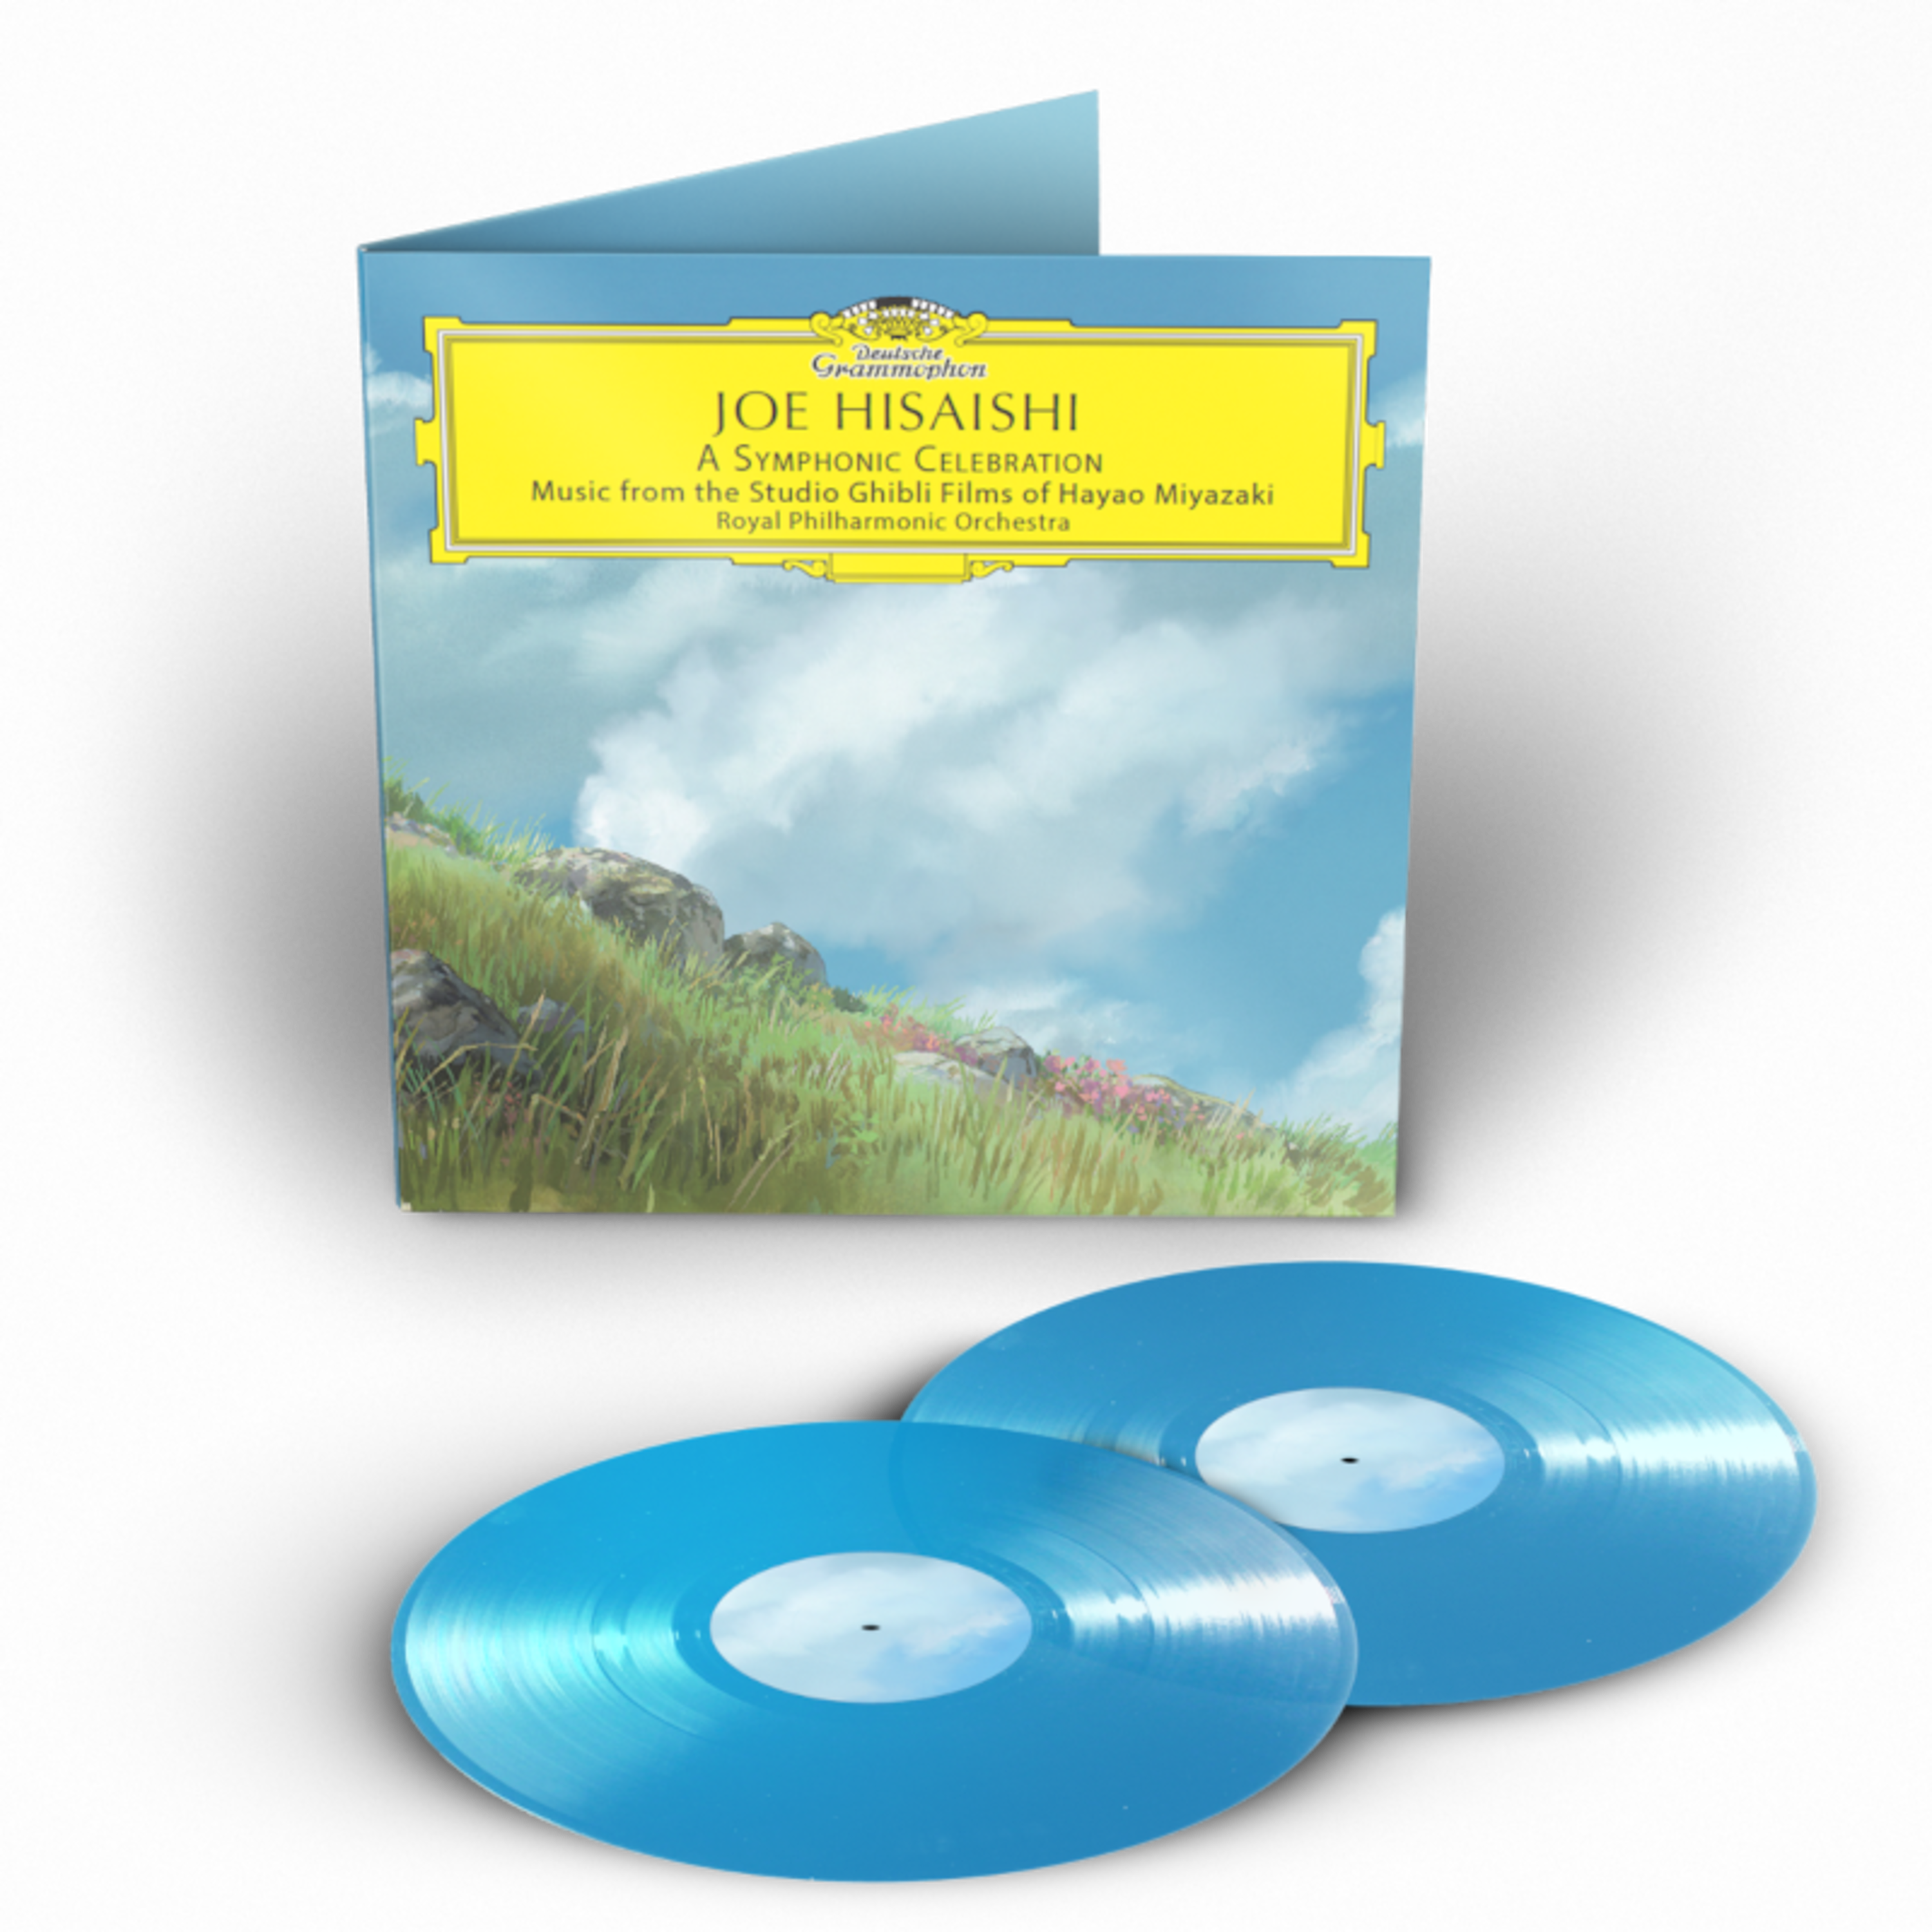 Studio Ghibli re-issues studio soundtracks on limited edition vinyl